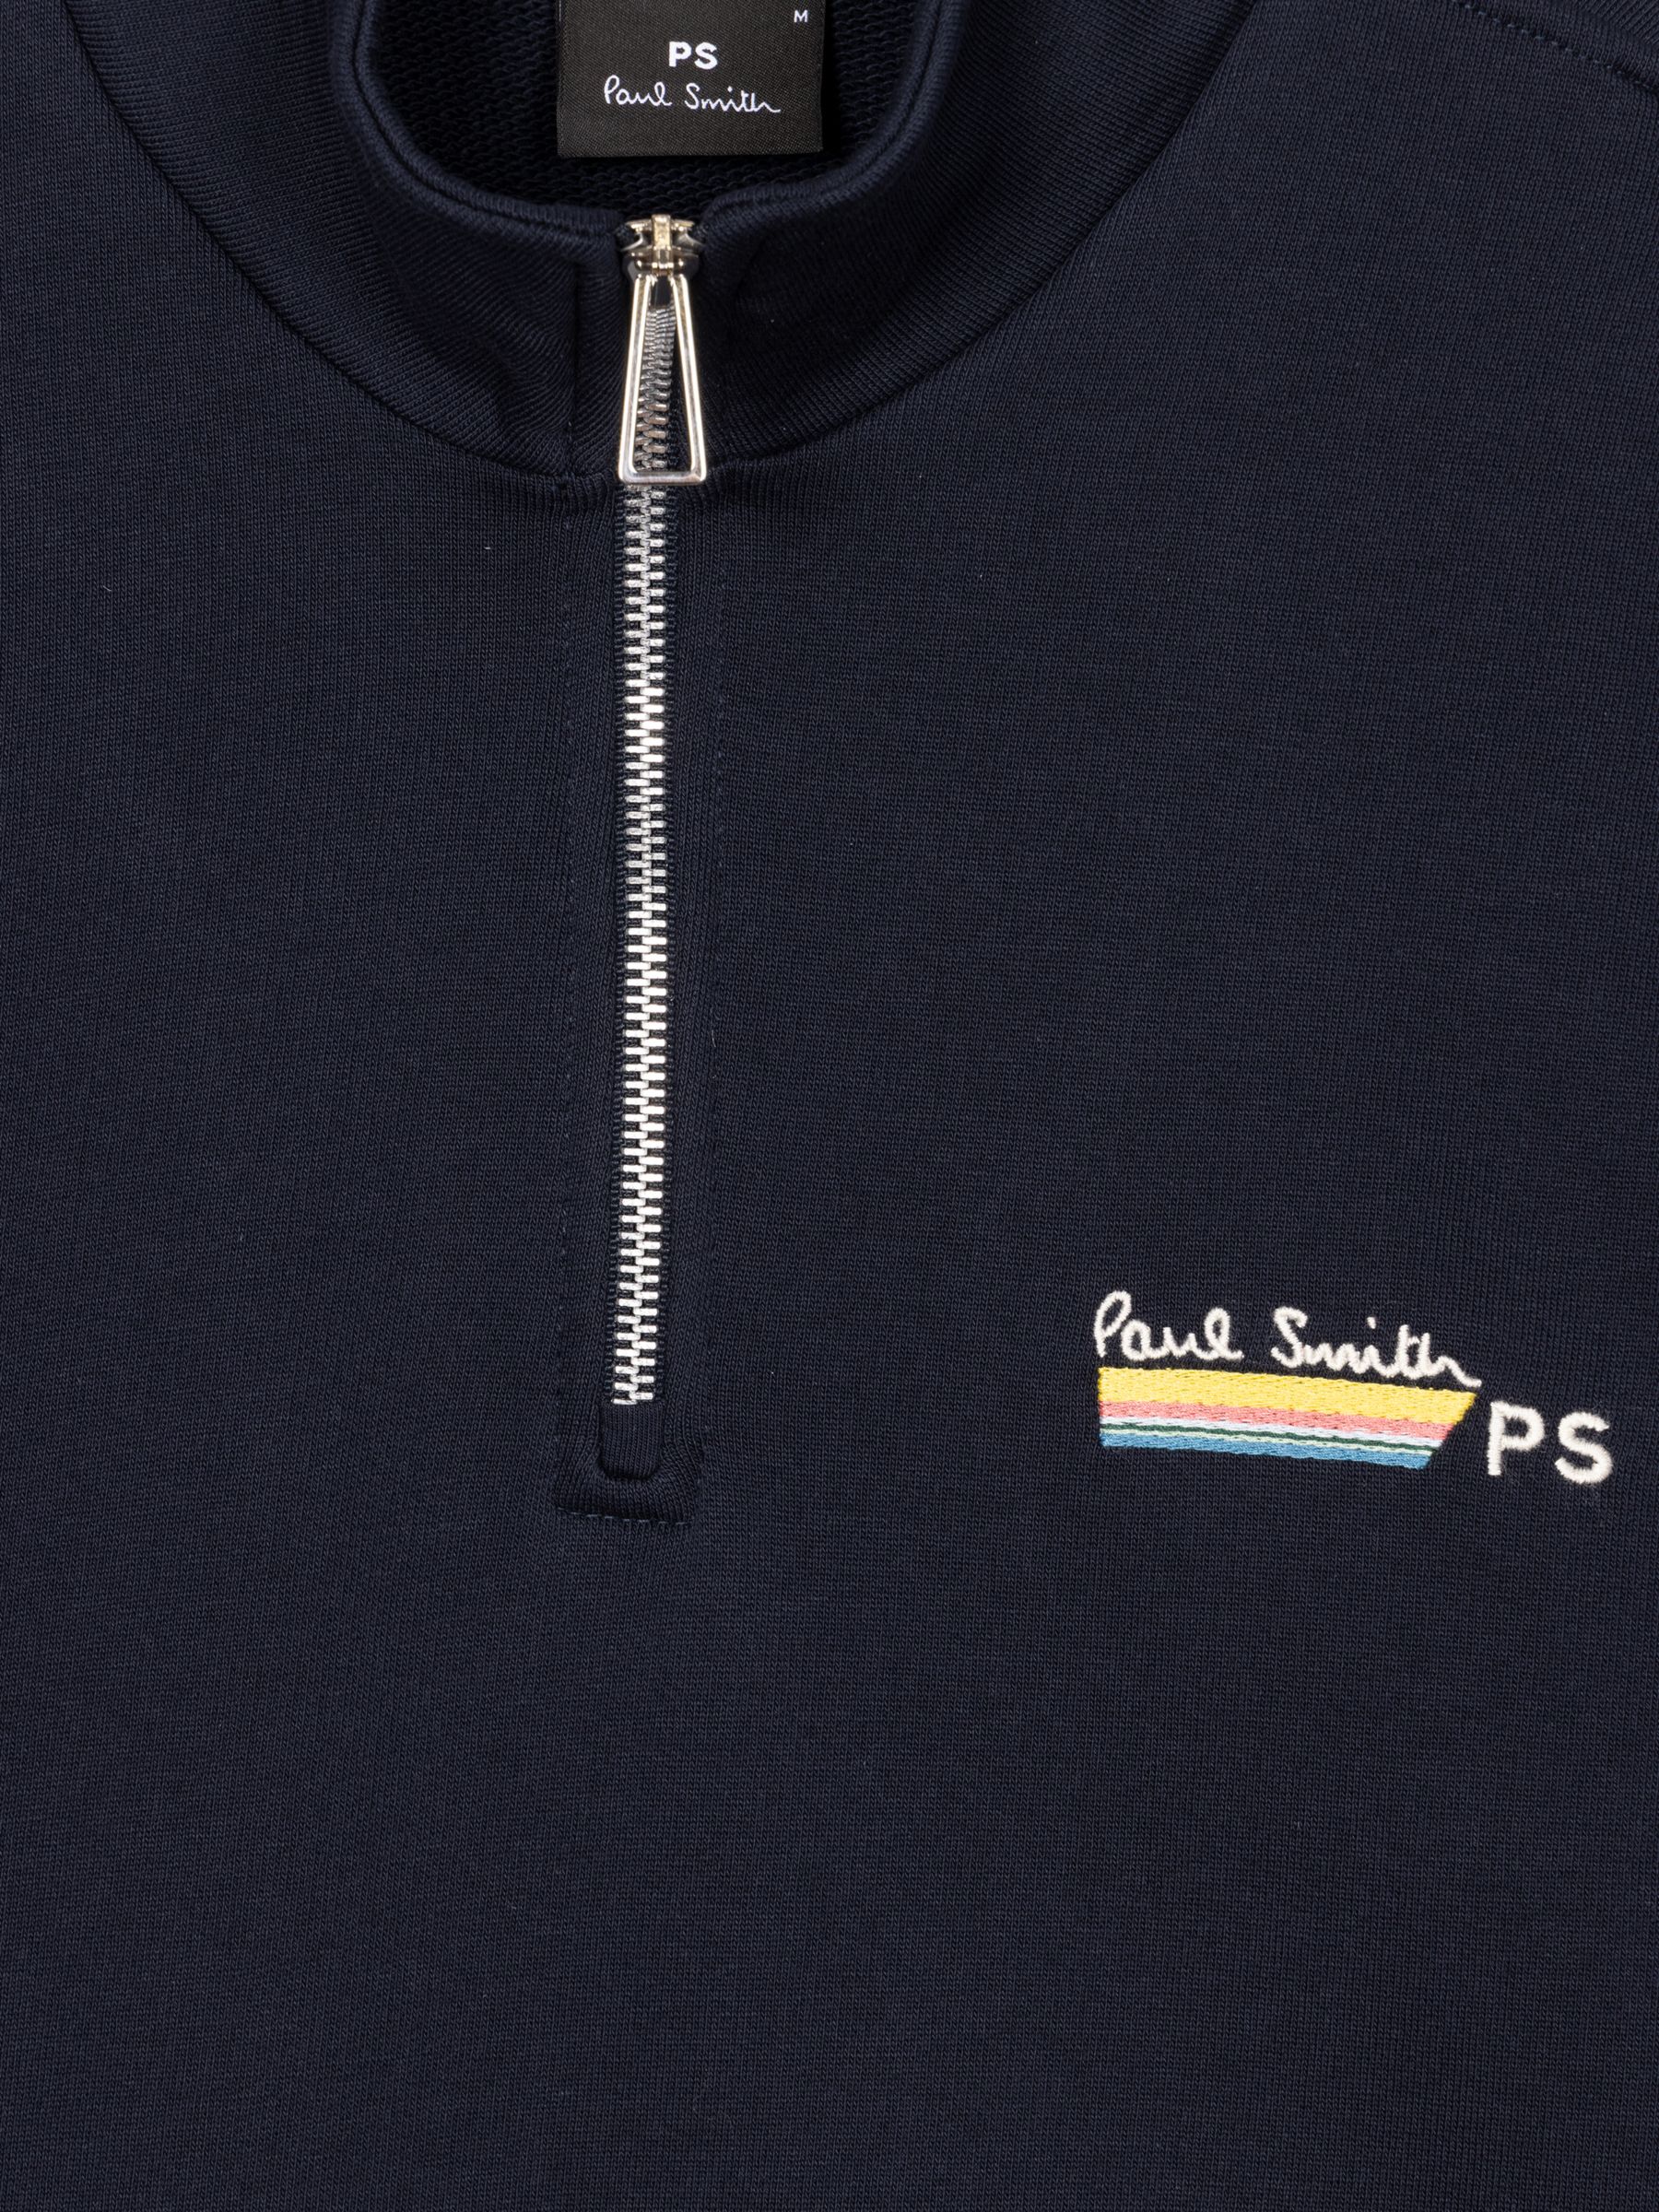 Check styling ideas for「Fleece Half-Zip Pullover Shirt、Smart